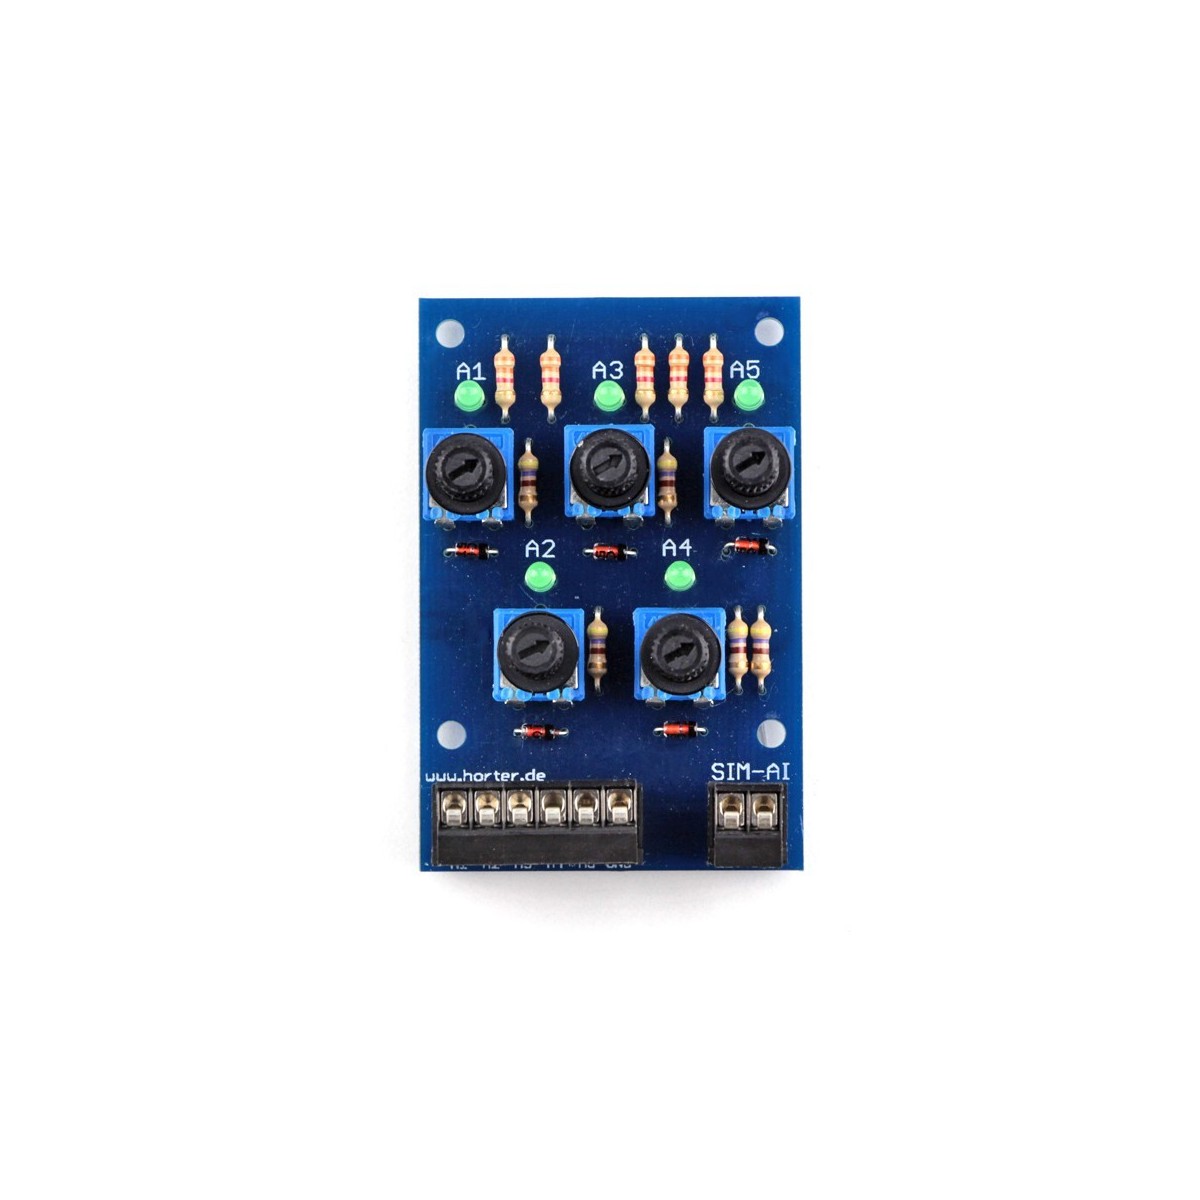 Kit simulator module for 5 analog signals setpoint adjuster